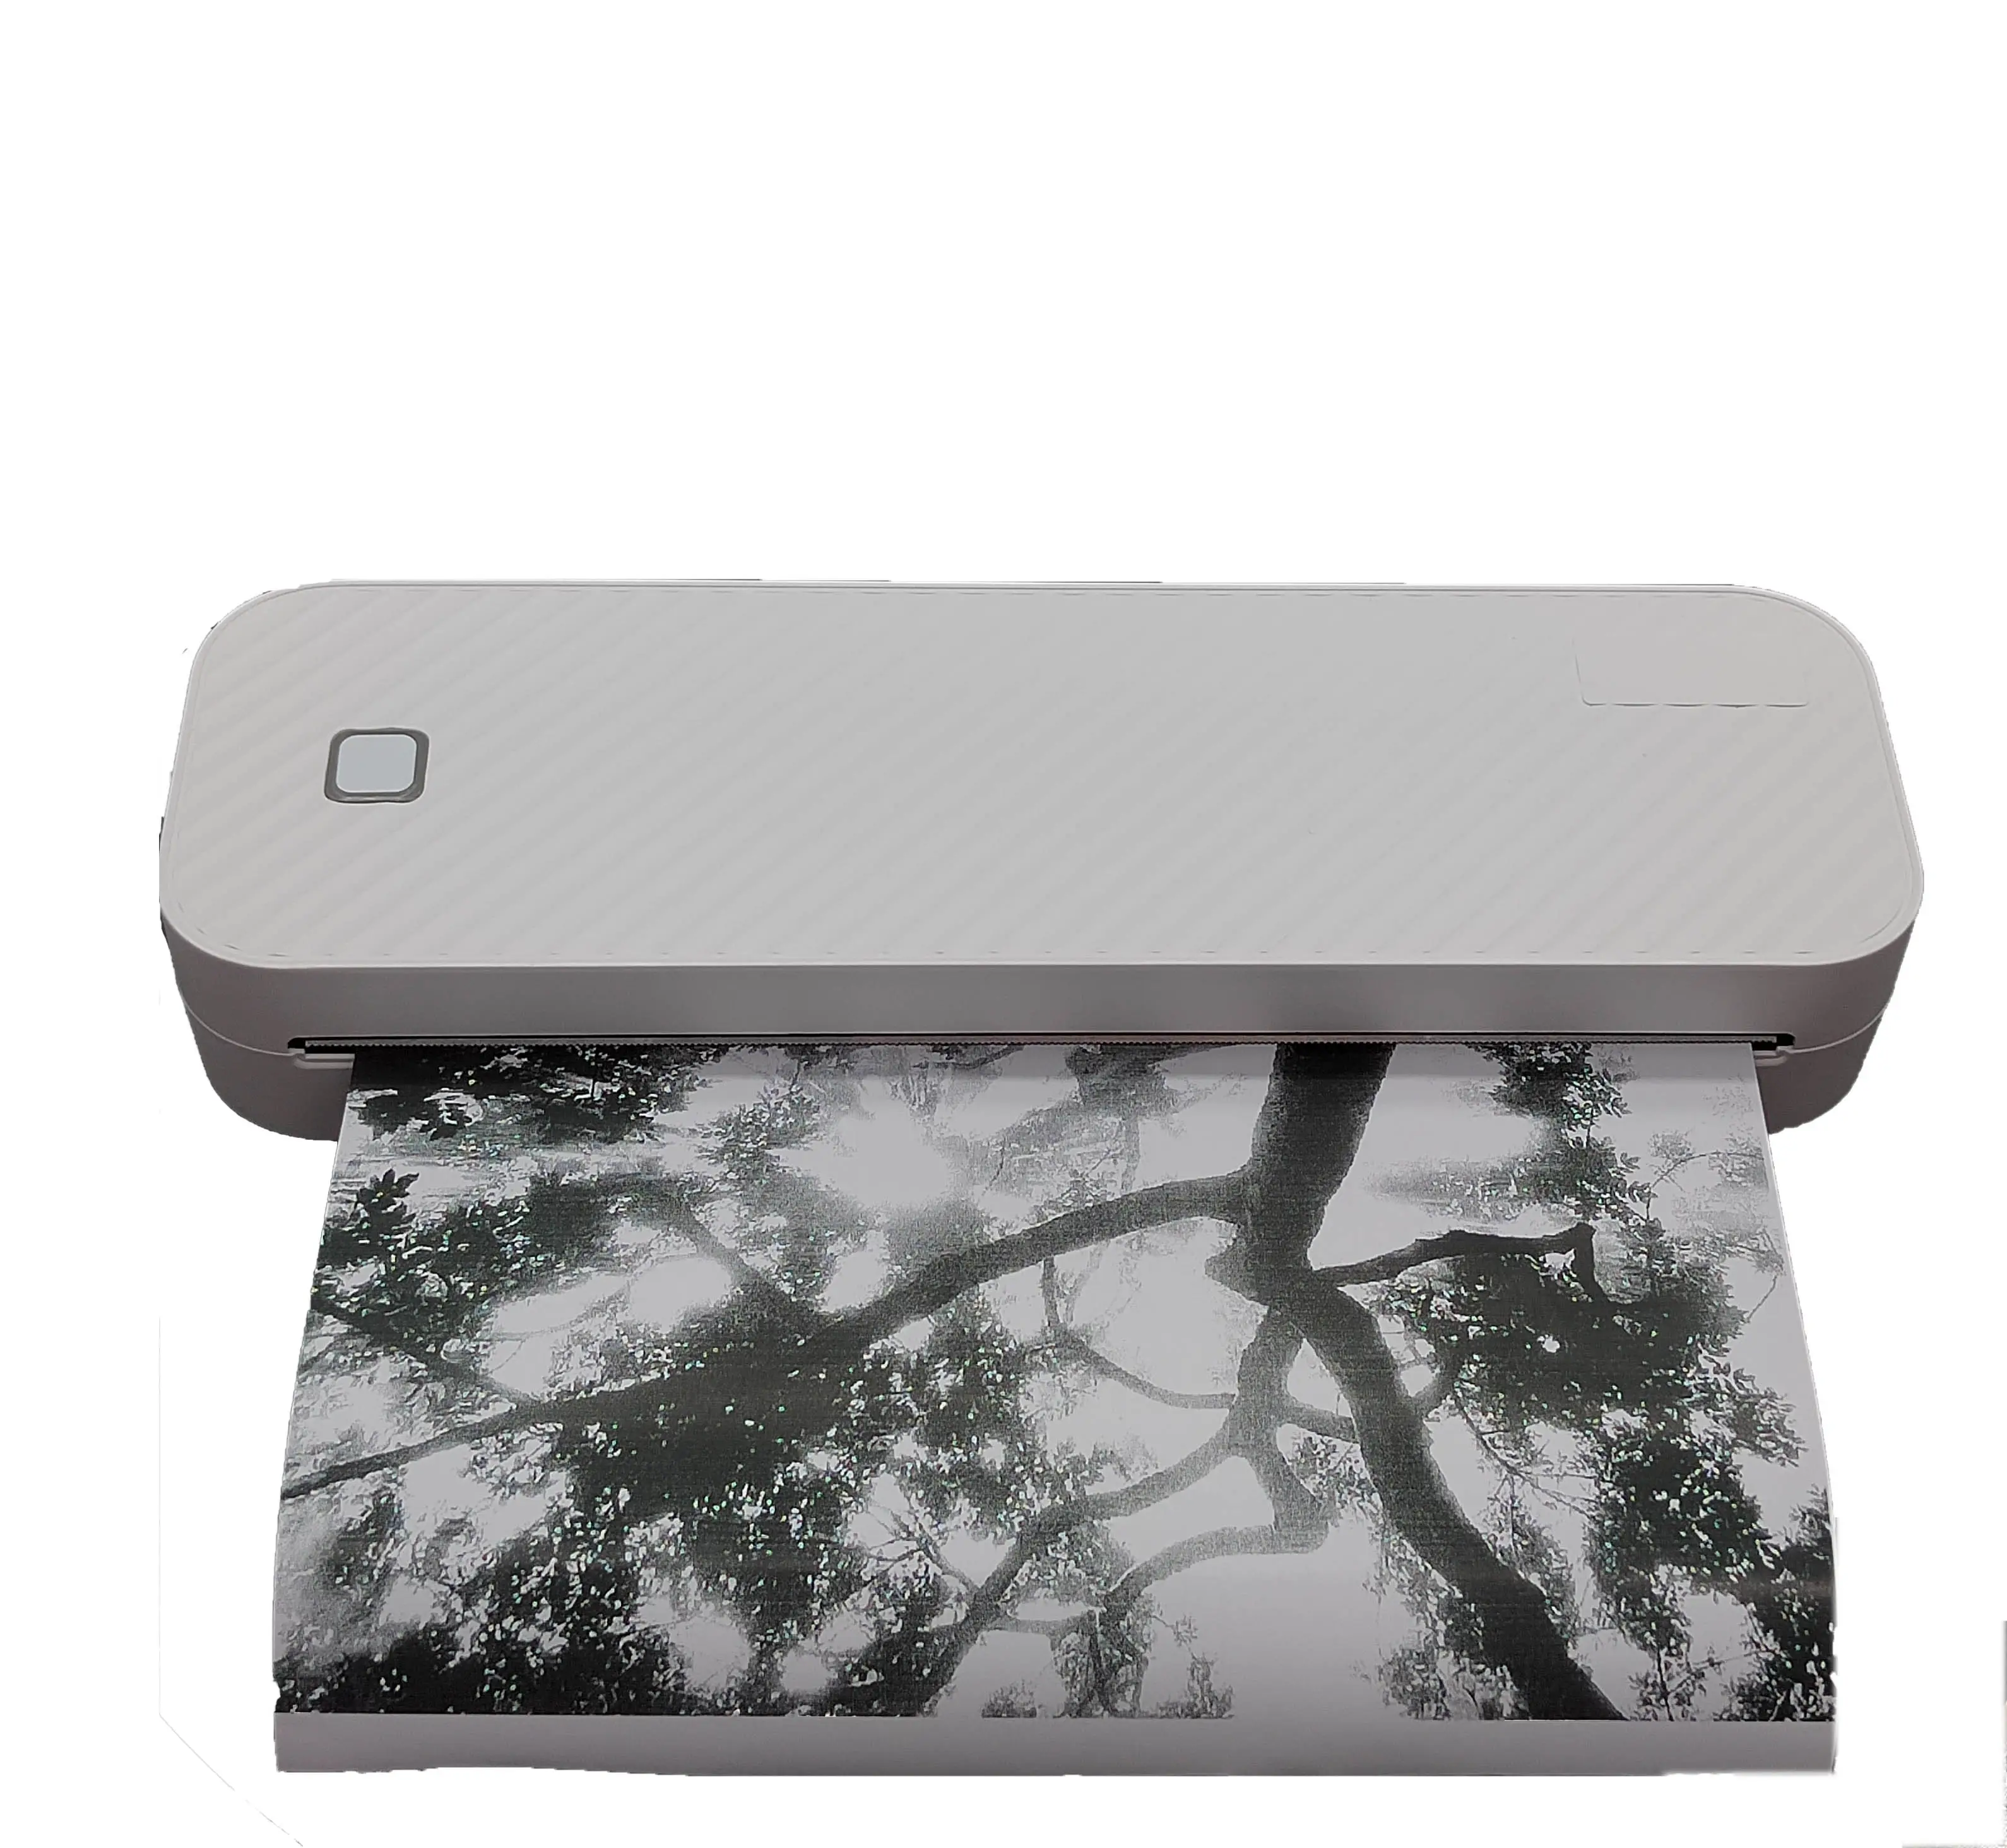 NEW product Inkless Pocket Printer Mini Portable A4